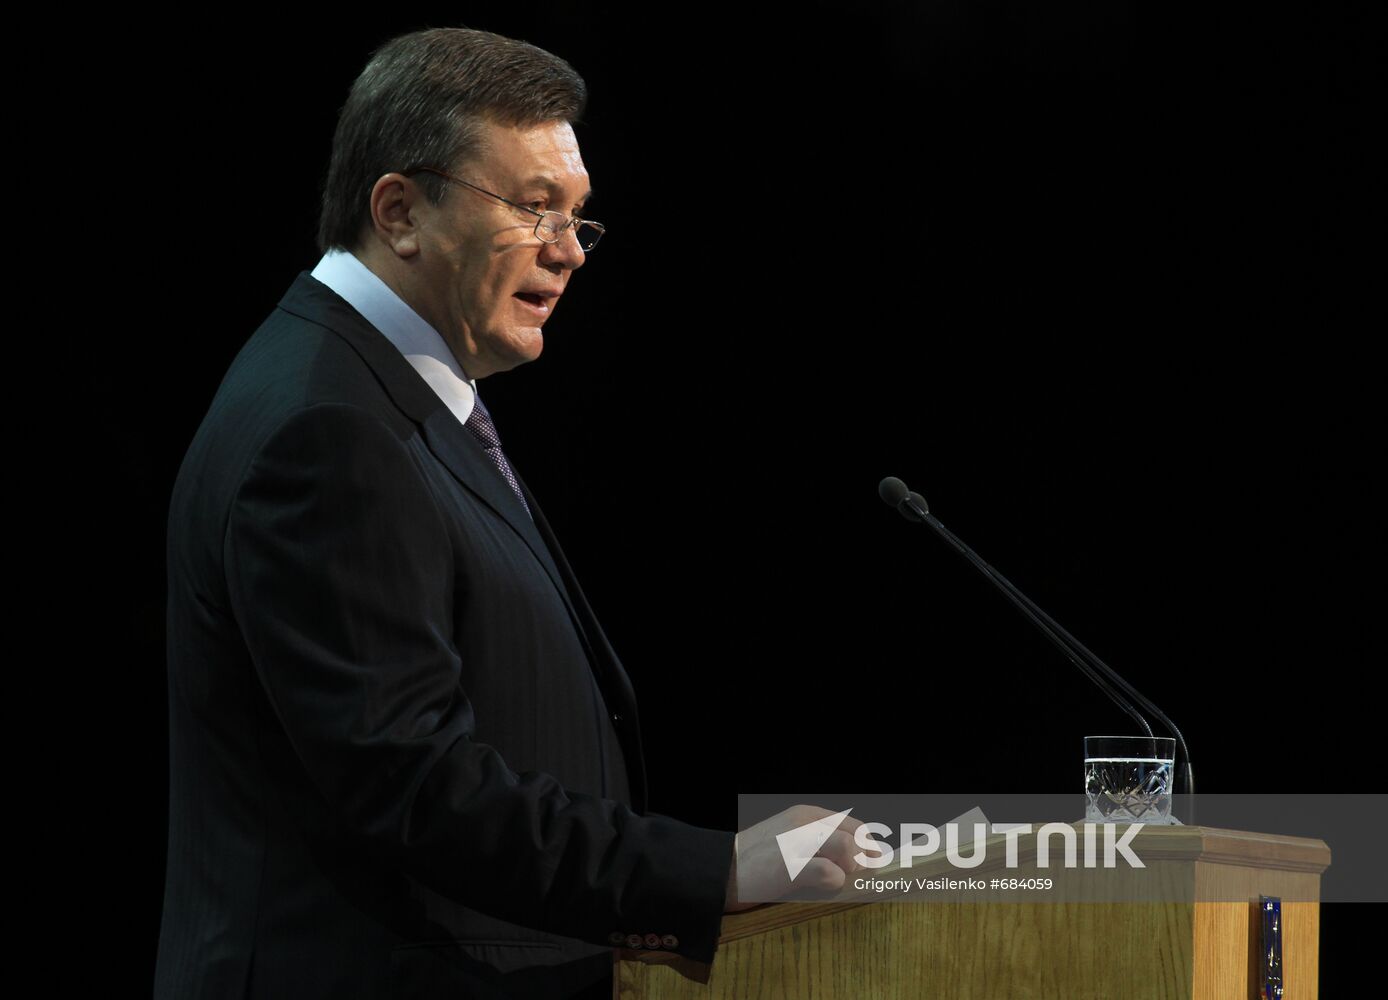 Ukrainian President Viktor Yanukovych addresses Ukrainian people